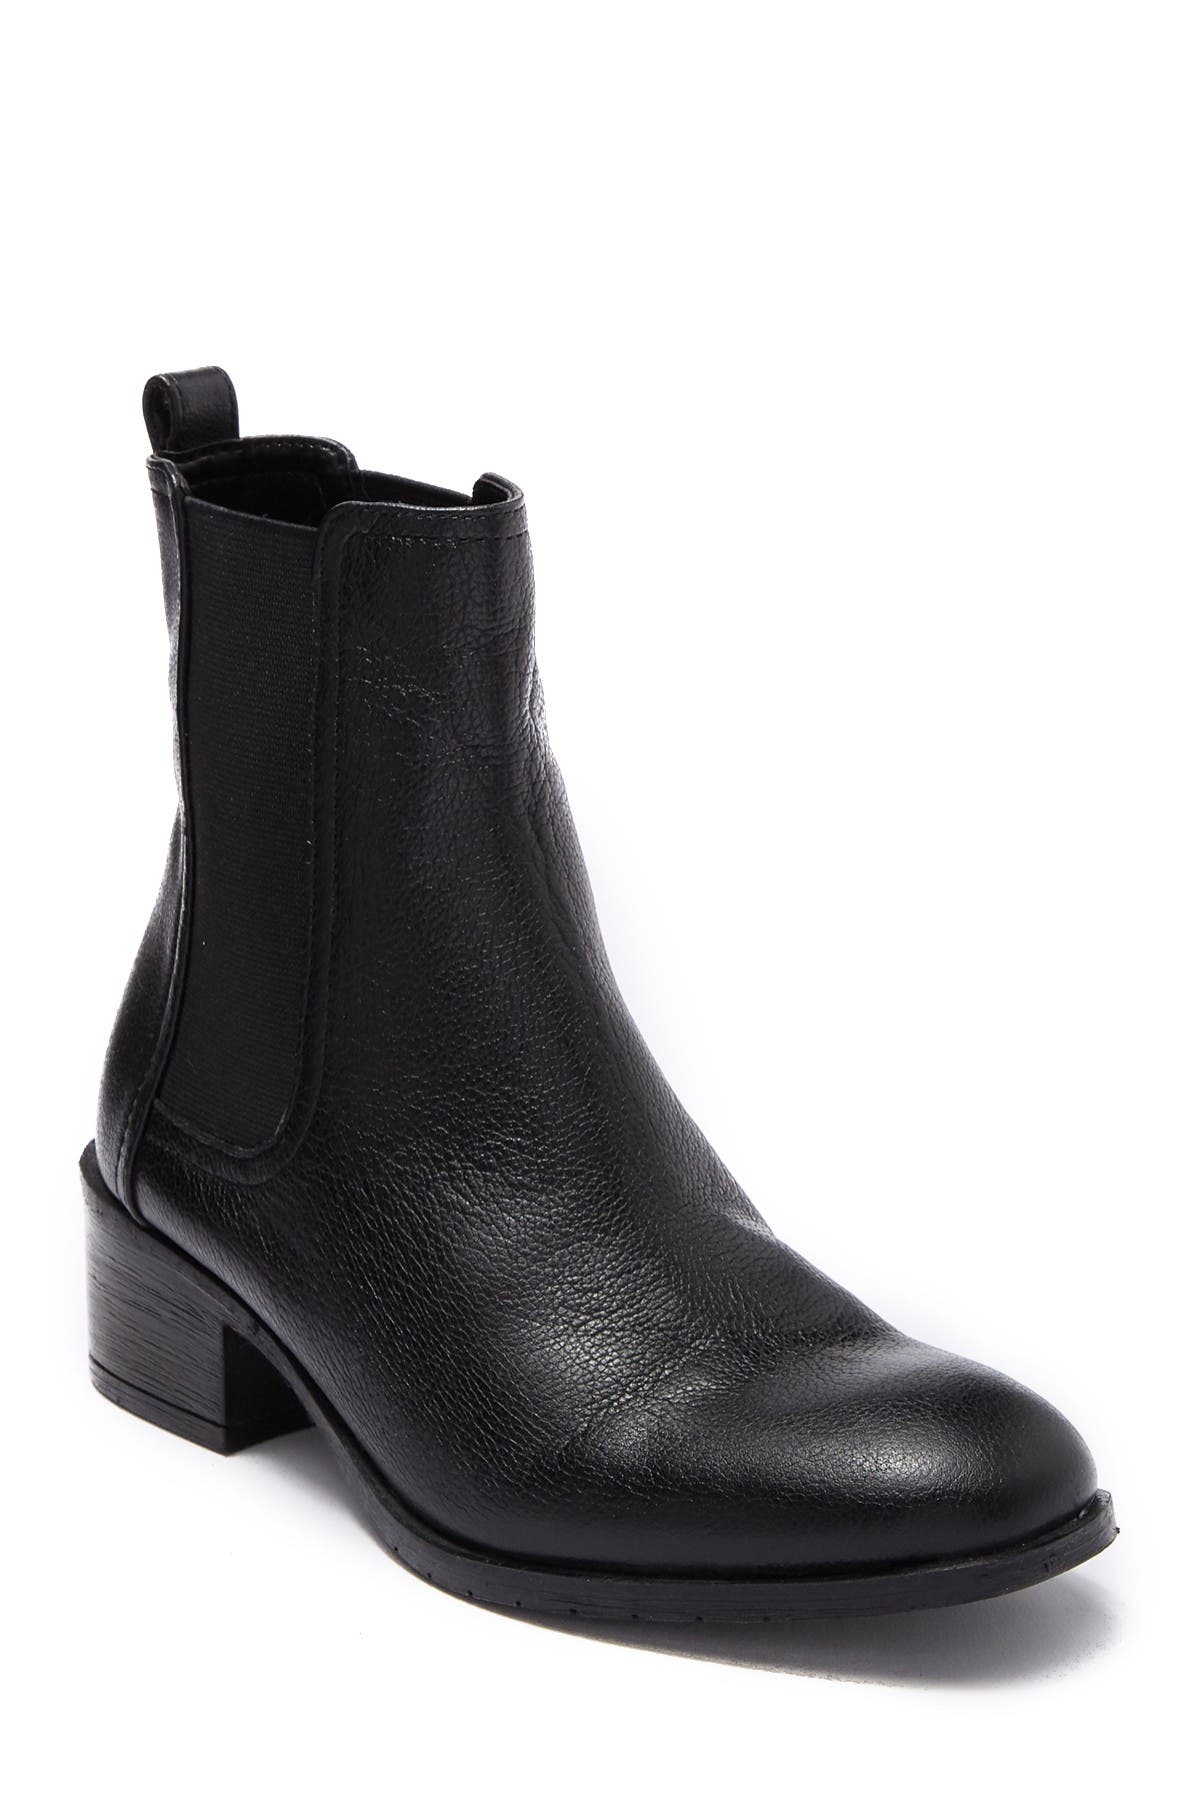 black chelsea boots nordstrom